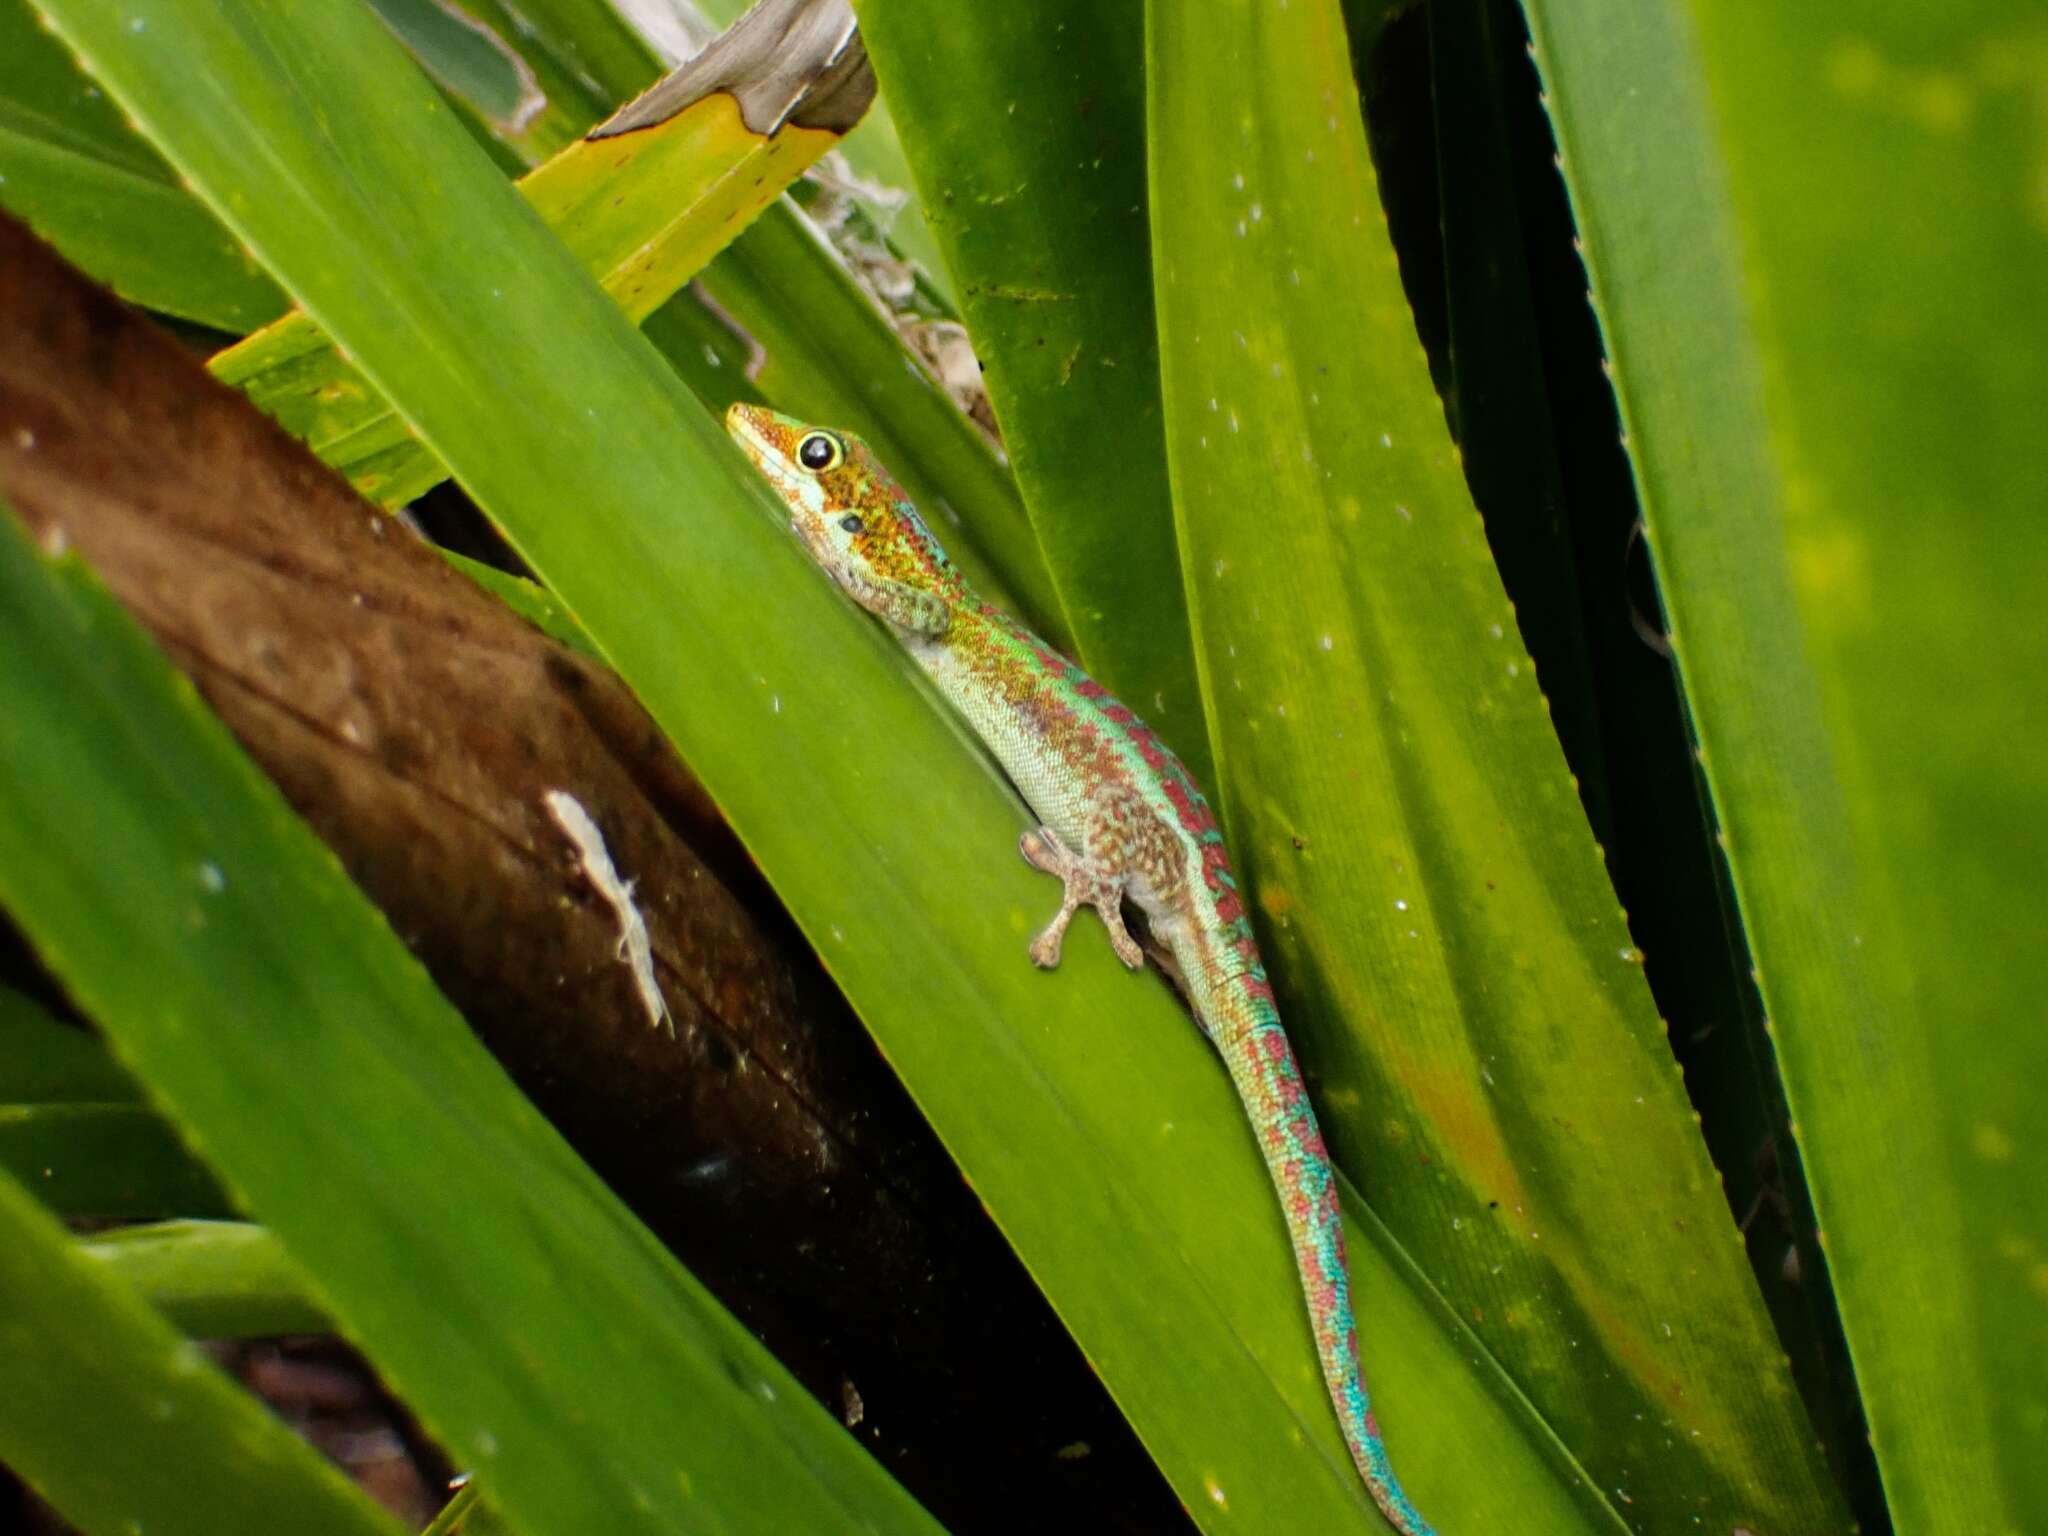 Image of Reunion Island day gecko